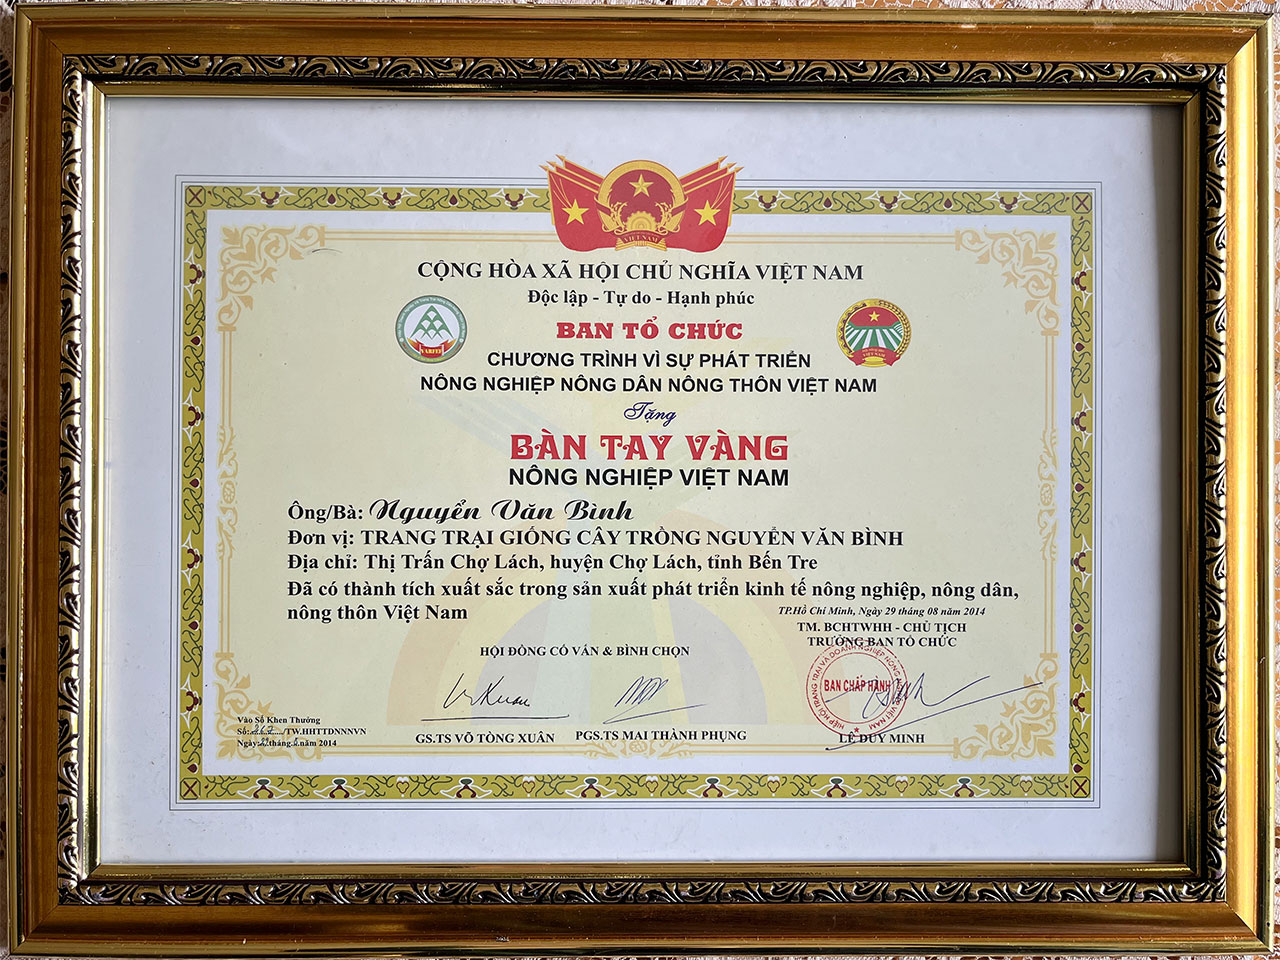 Bantayvang NongnghiepVietnam